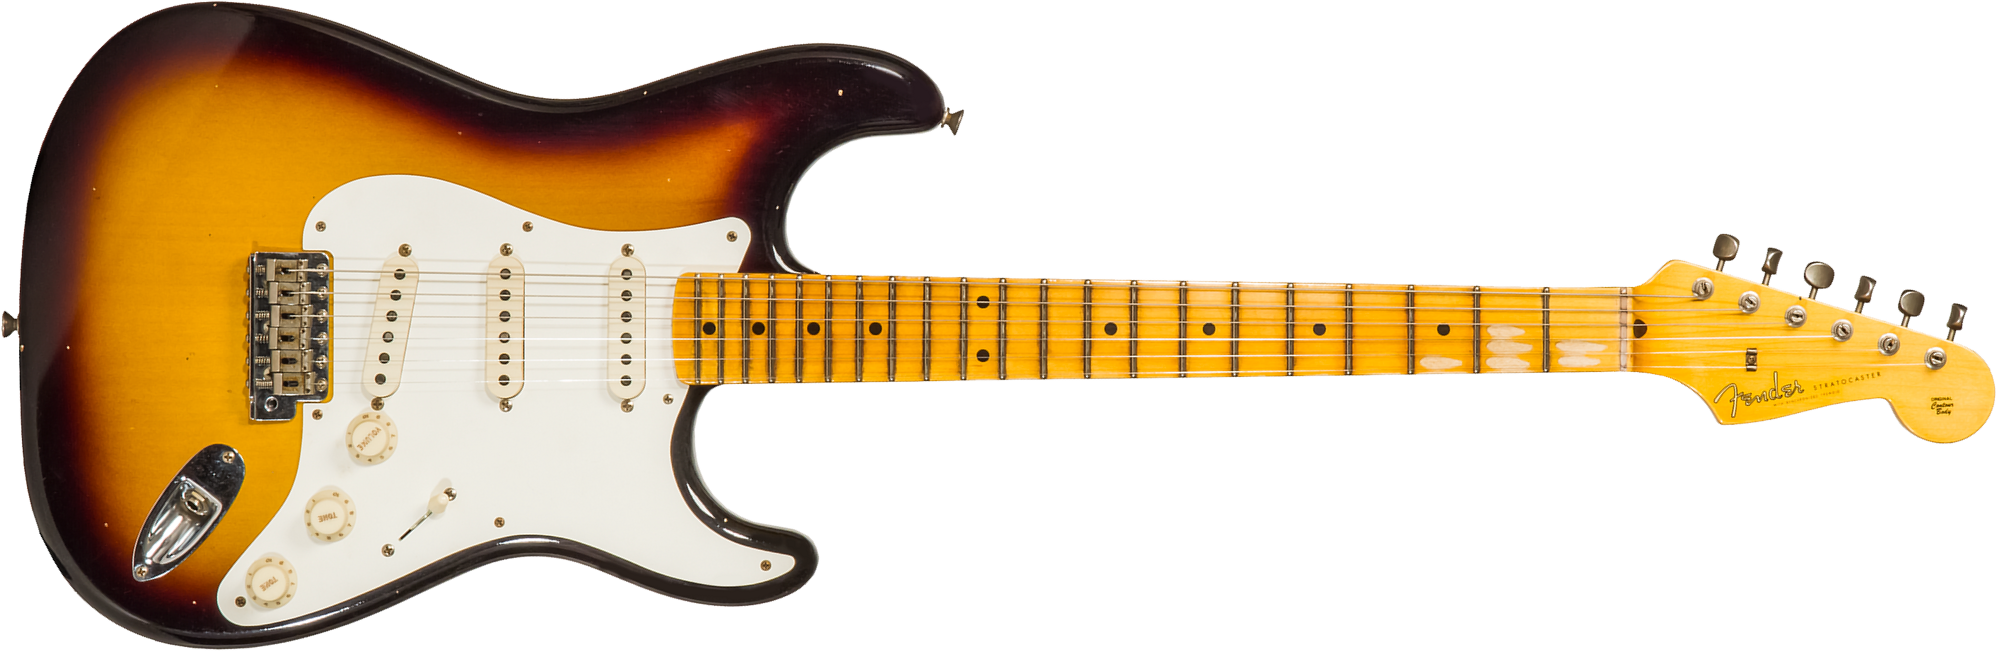 Fender Custom Shop Strat 1956 3s Trem Mn #cz571884 - Journeyman Relic Aged 2-color Sunburst - Elektrische gitaar in Str-vorm - Main picture